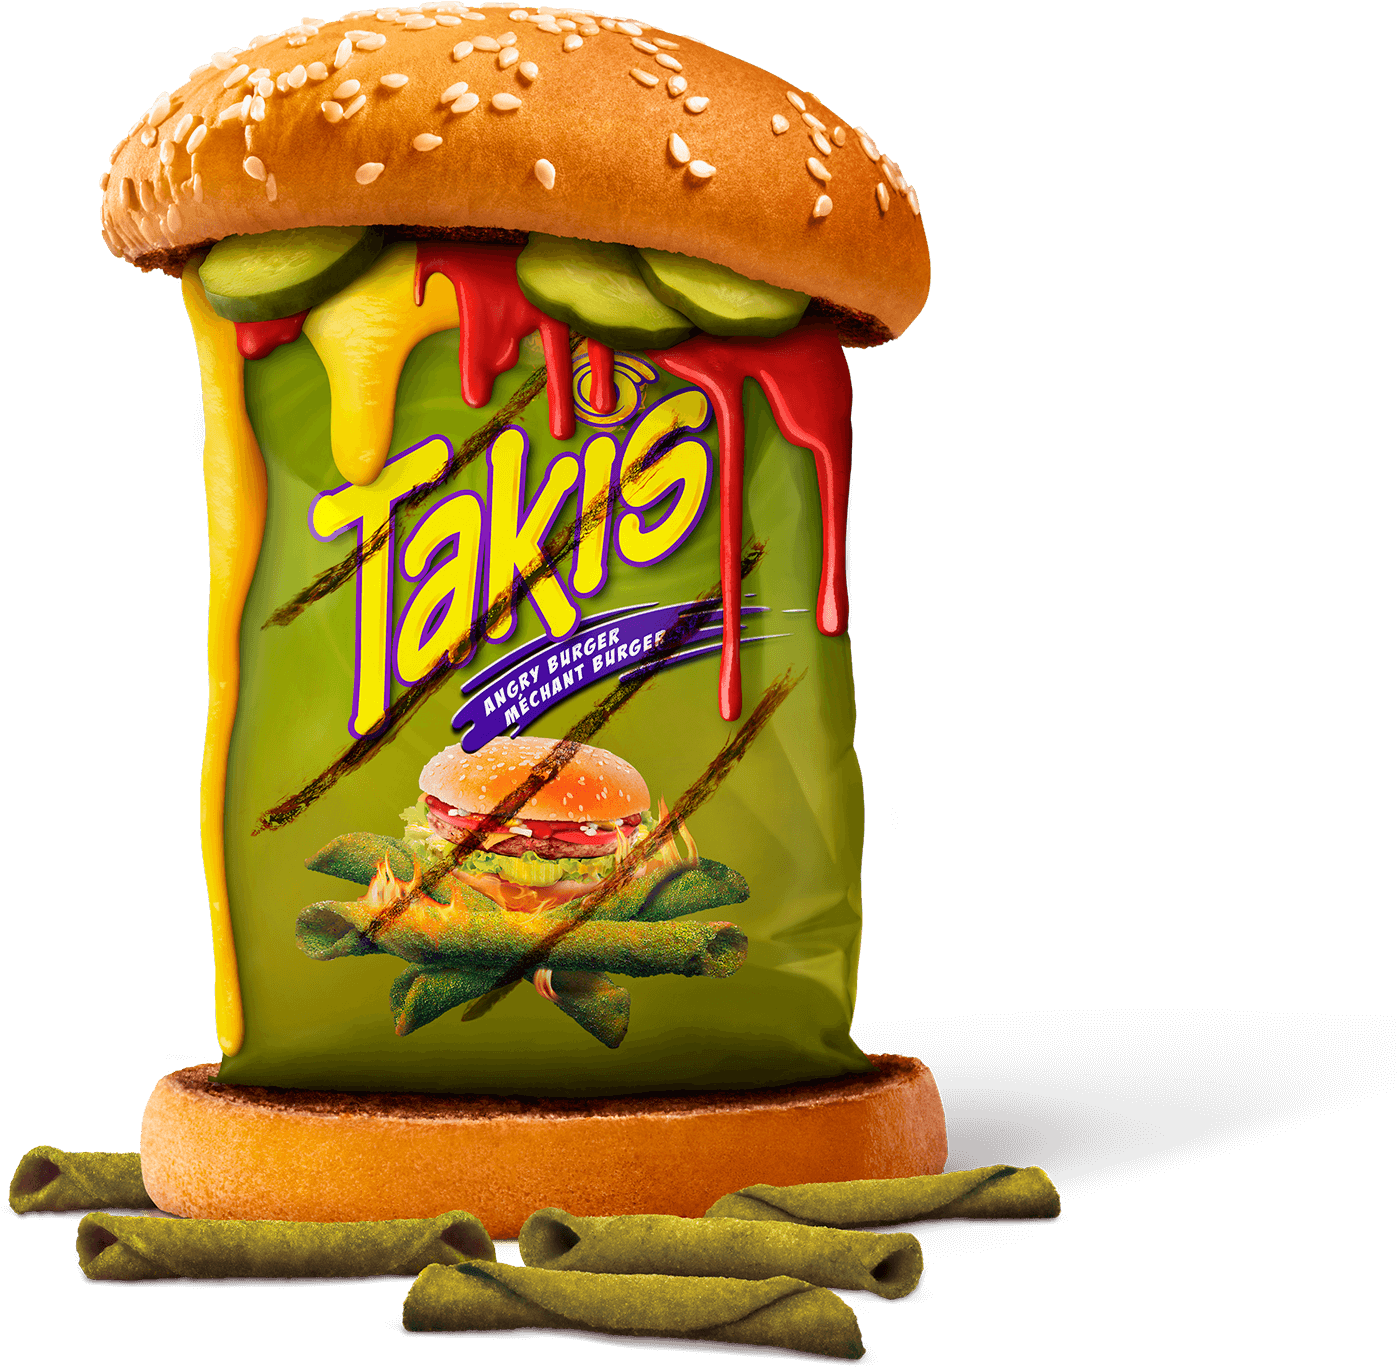 Takis Burger Flavored Chips Promotion PNG image